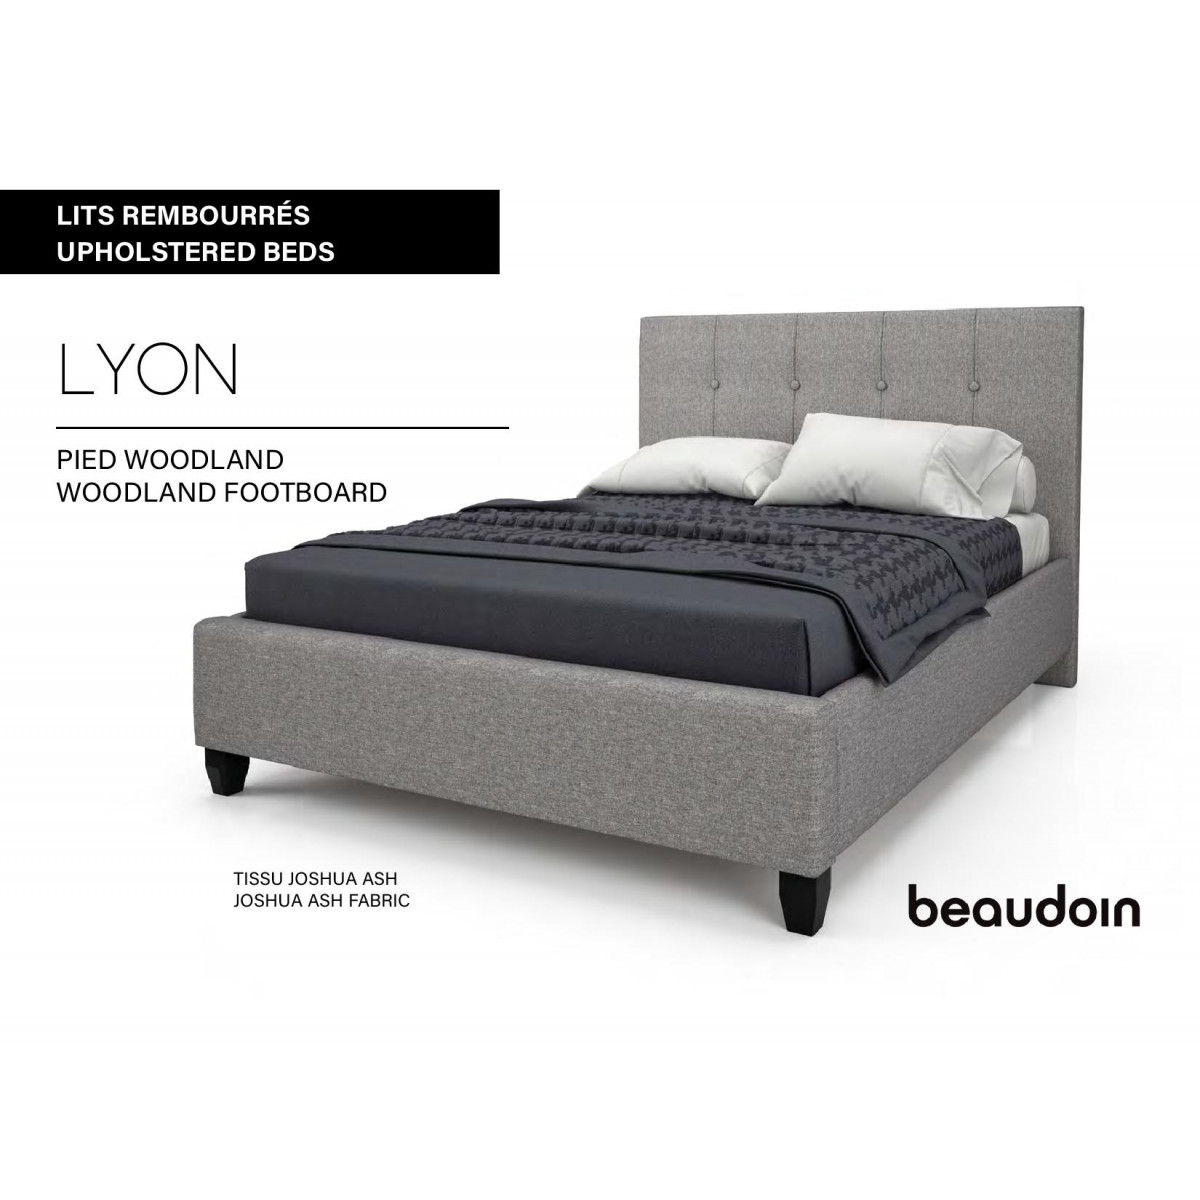 Lit Beaudoin Lyon